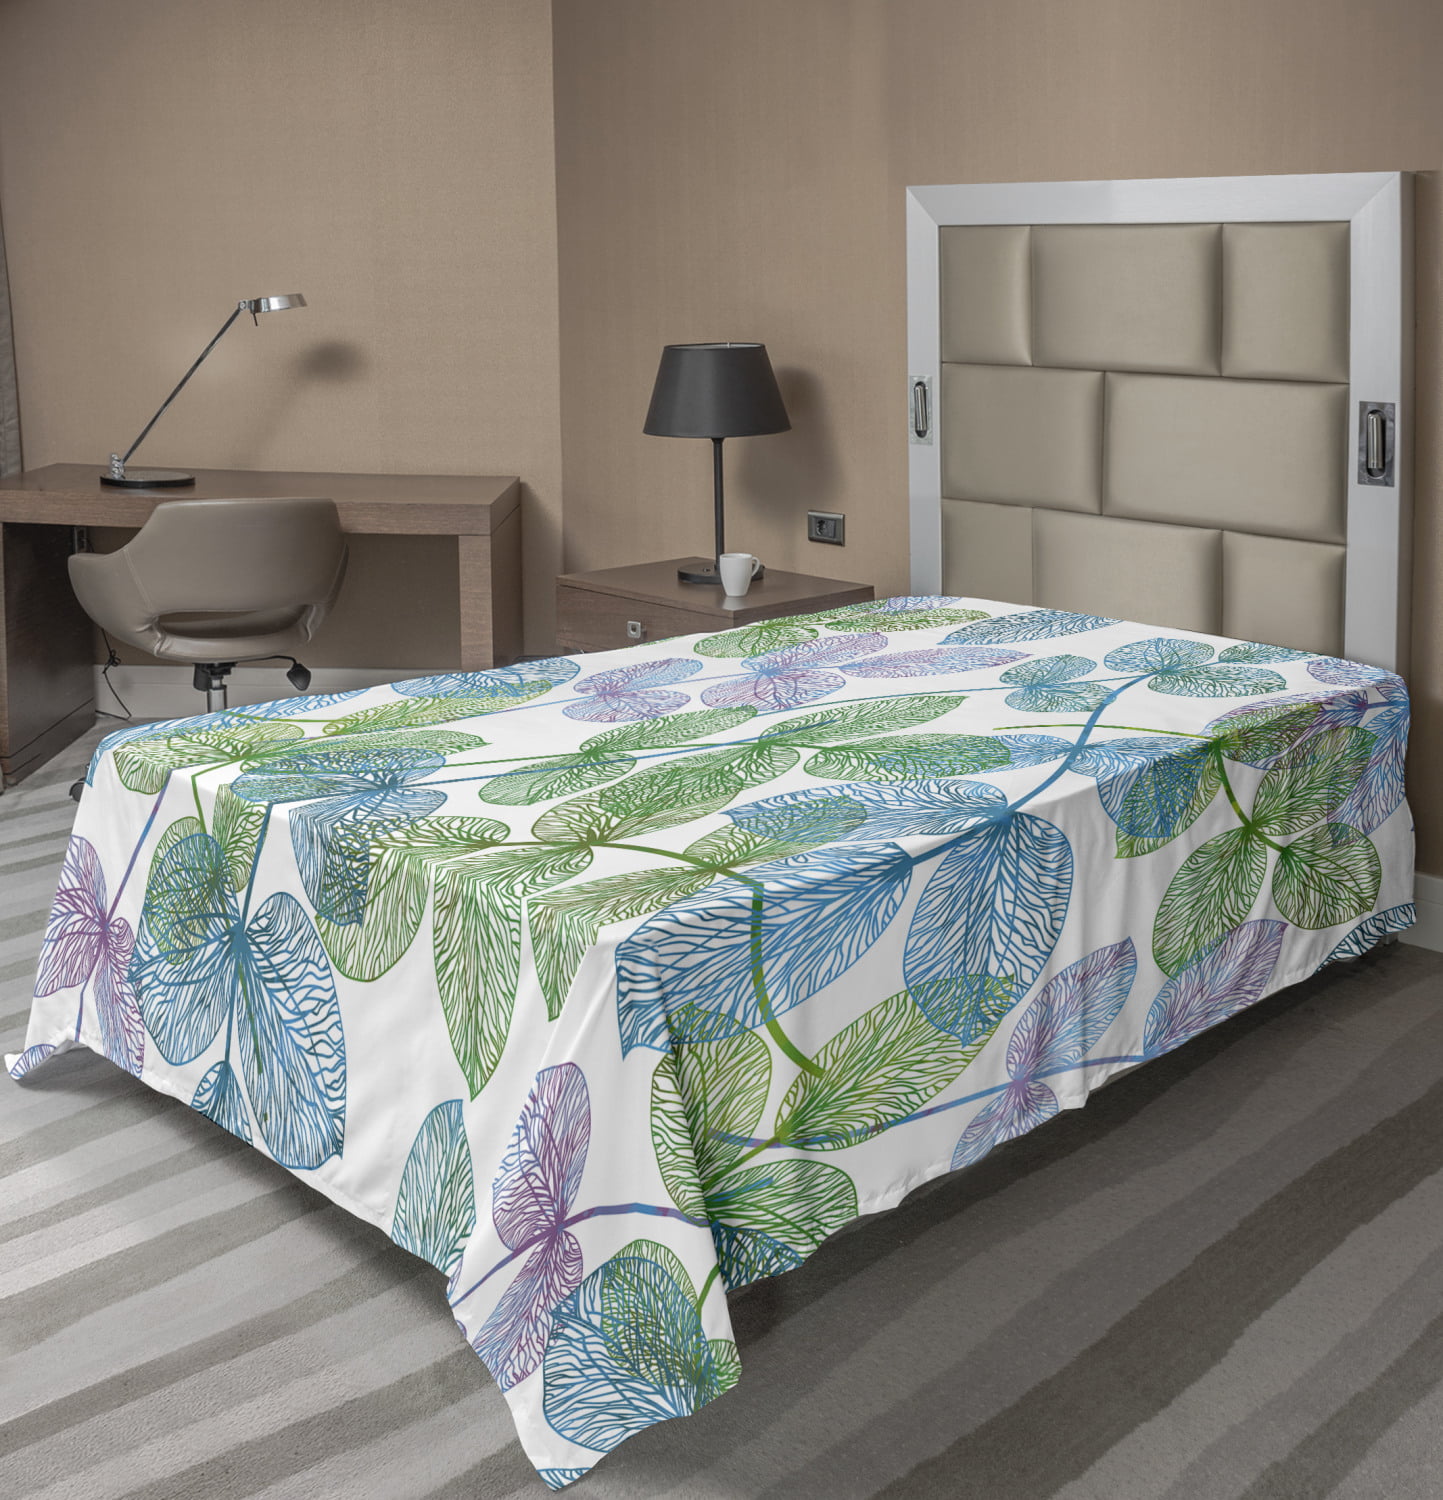 Ambesonne Ombre Art Flat Sheet Top Sheet Decorative Bedding 6 Sizes 